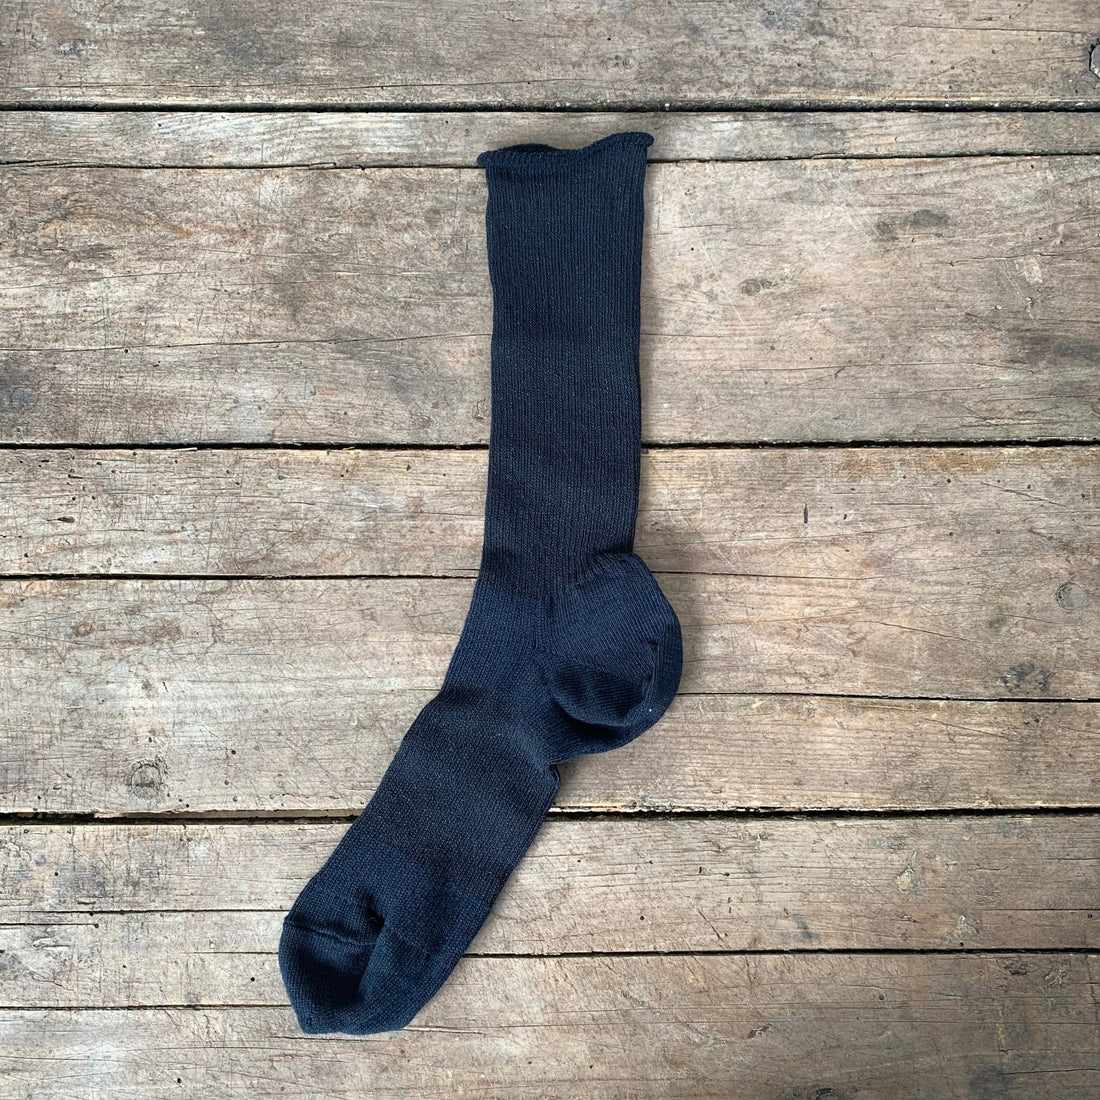 Verano Socks - Ponte de Pie!(Japanese socks) - MIKAFleursocks